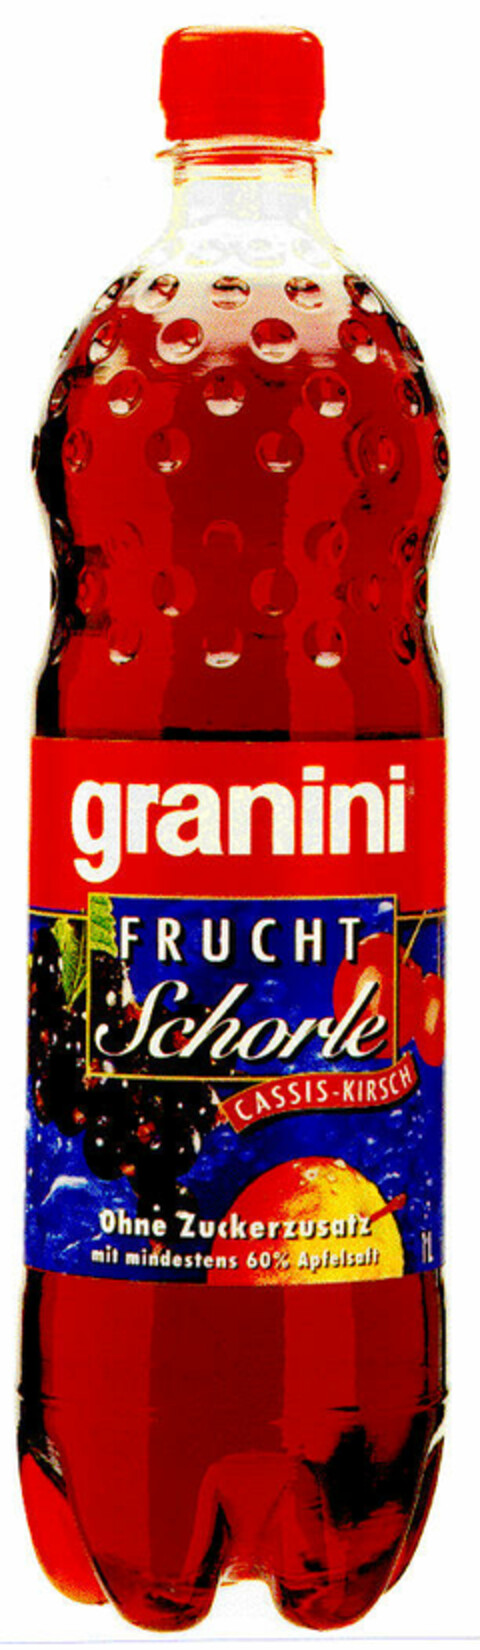 granini FRUCHT Schorle CASSIS-KIRSCH Logo (DPMA, 05.11.1999)